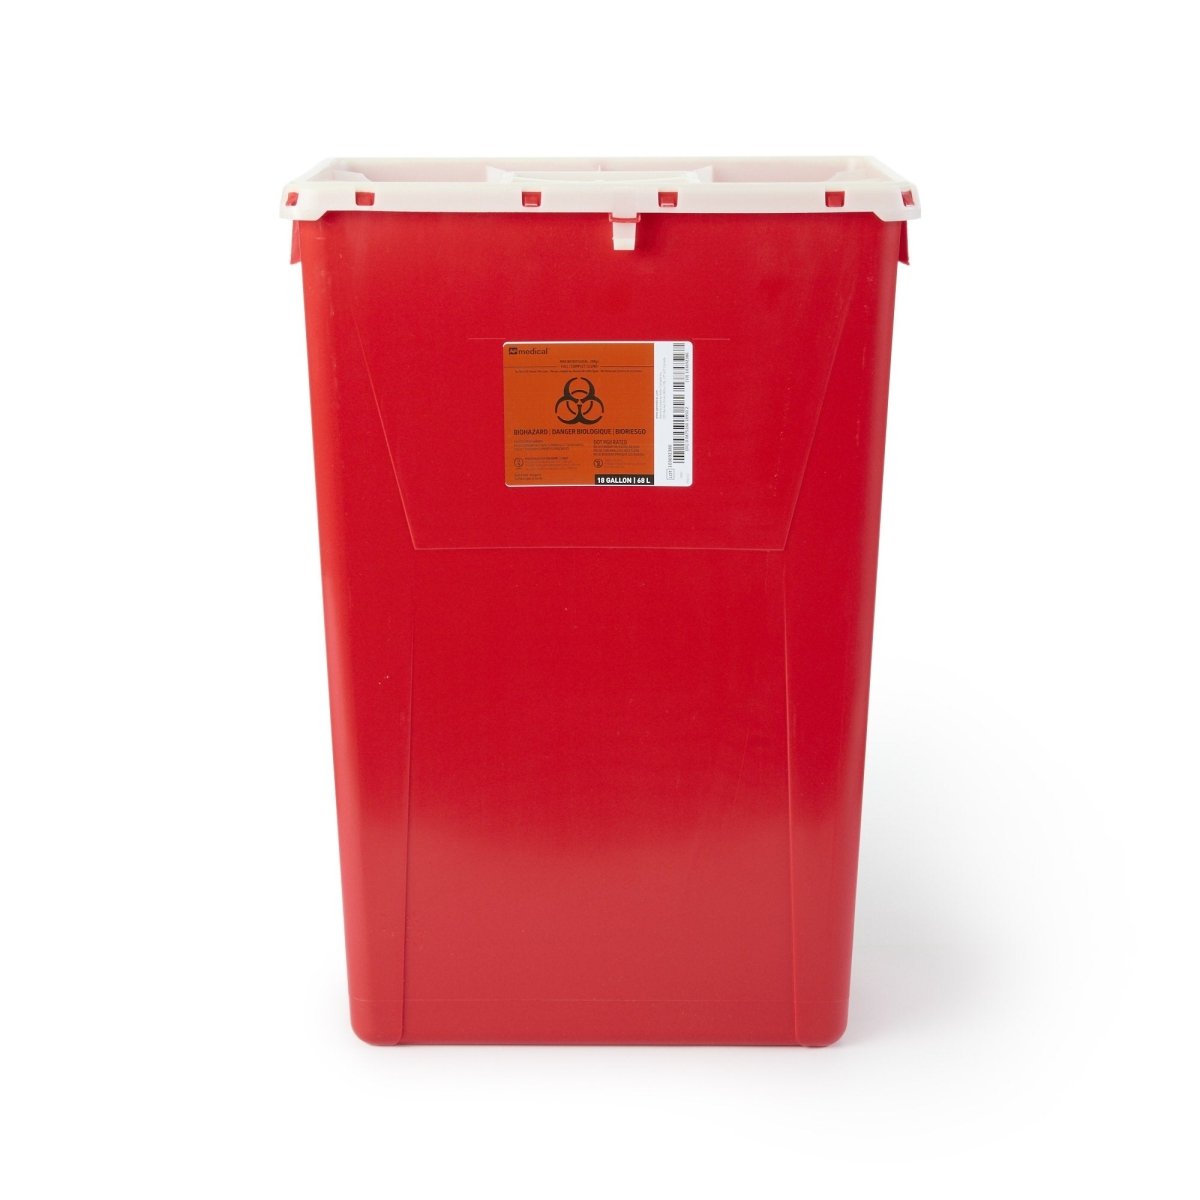 Ap Line Biohazard Waste Container - 907258_CS - 1